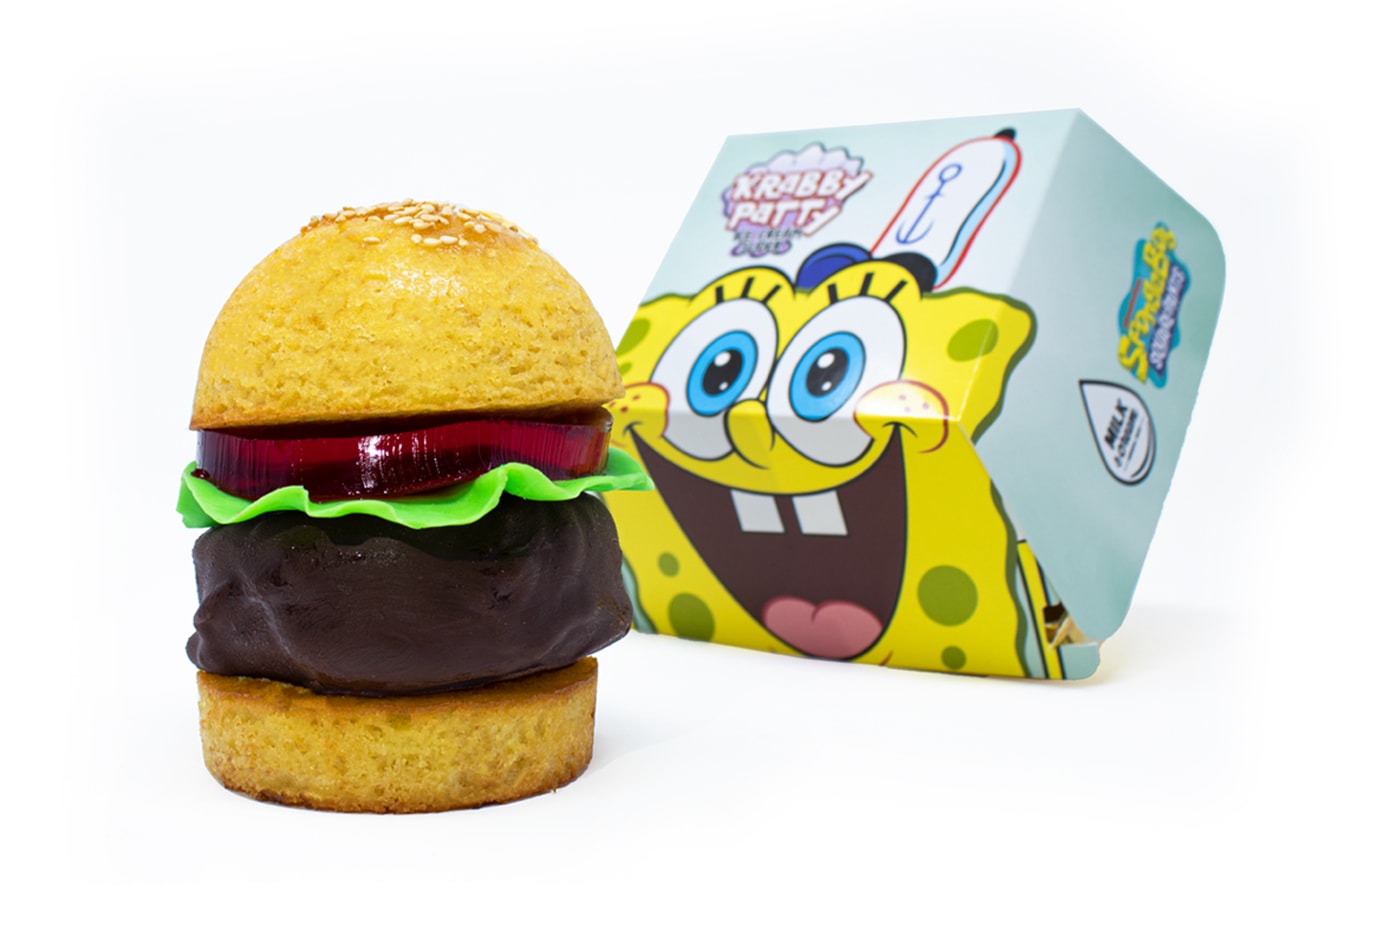 Milk Cream Cereal Bar Spongebob Squarepants Krabby Patty Ice Cream Sliders info food burger mr krabs krusty cartoon franchise Nickelodeon